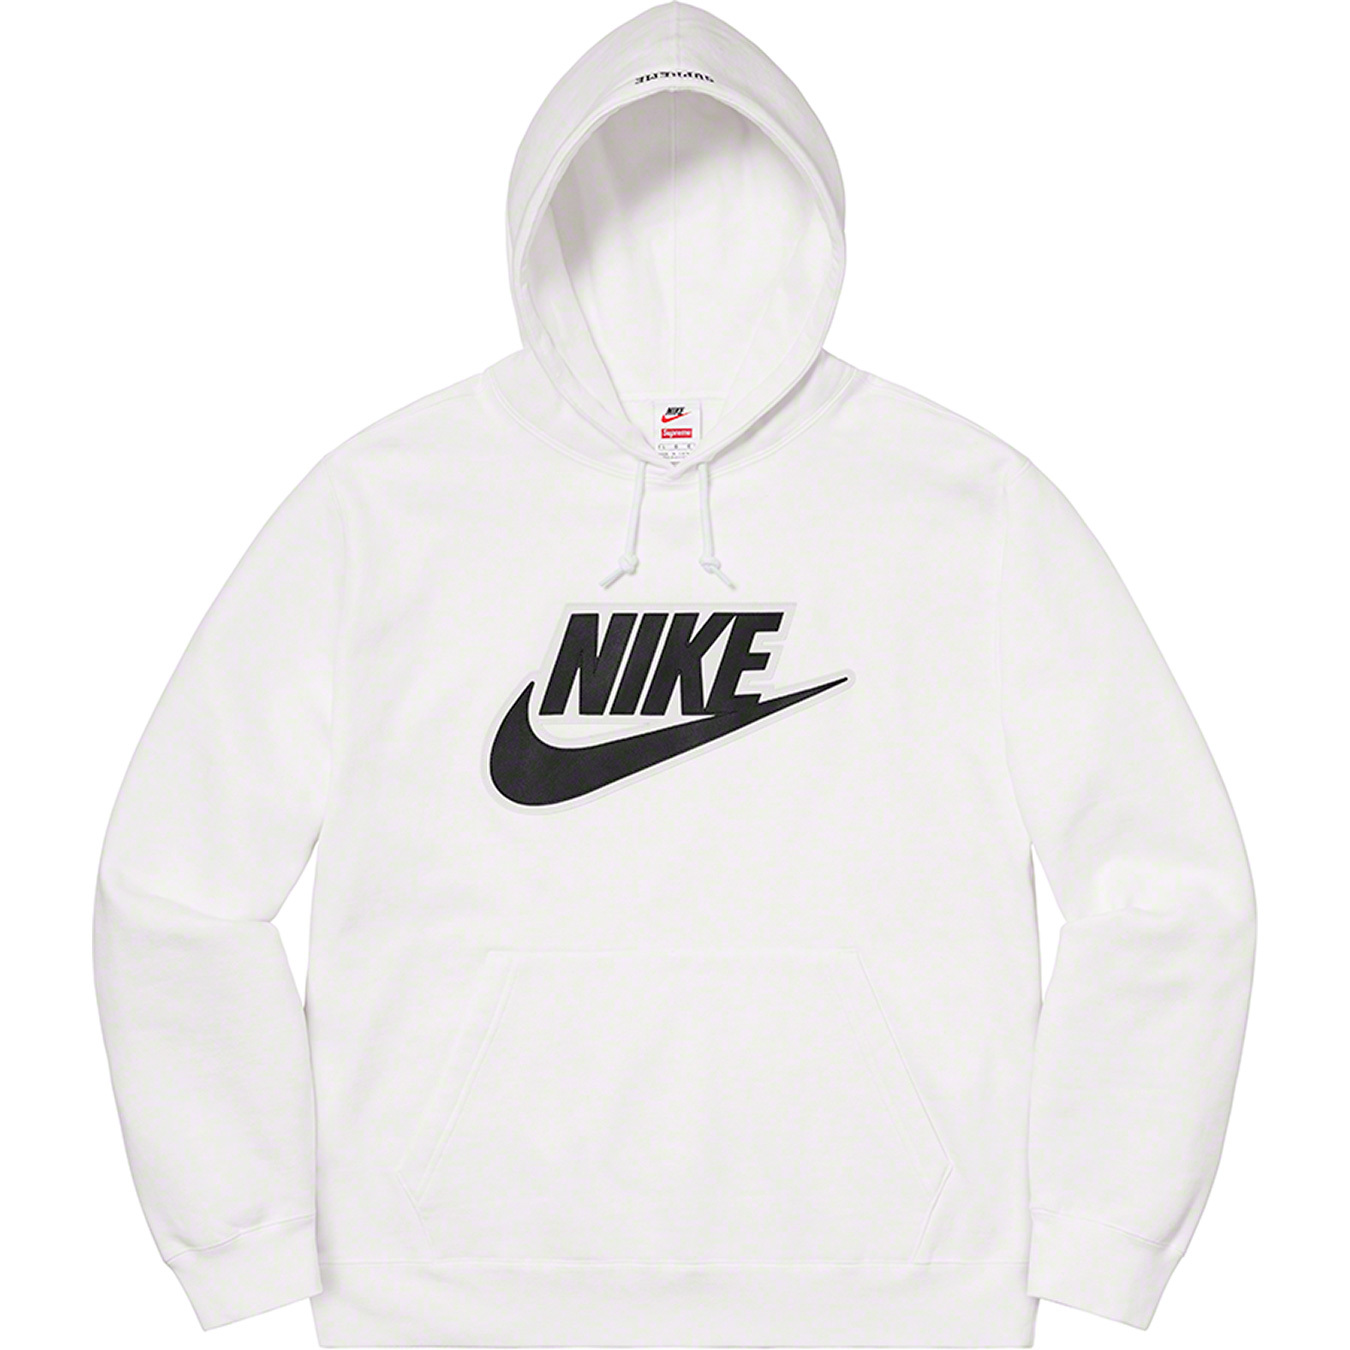 Supreme®/Nike® Leather Appliqué Hooded Sweatshirt - Supreme Community